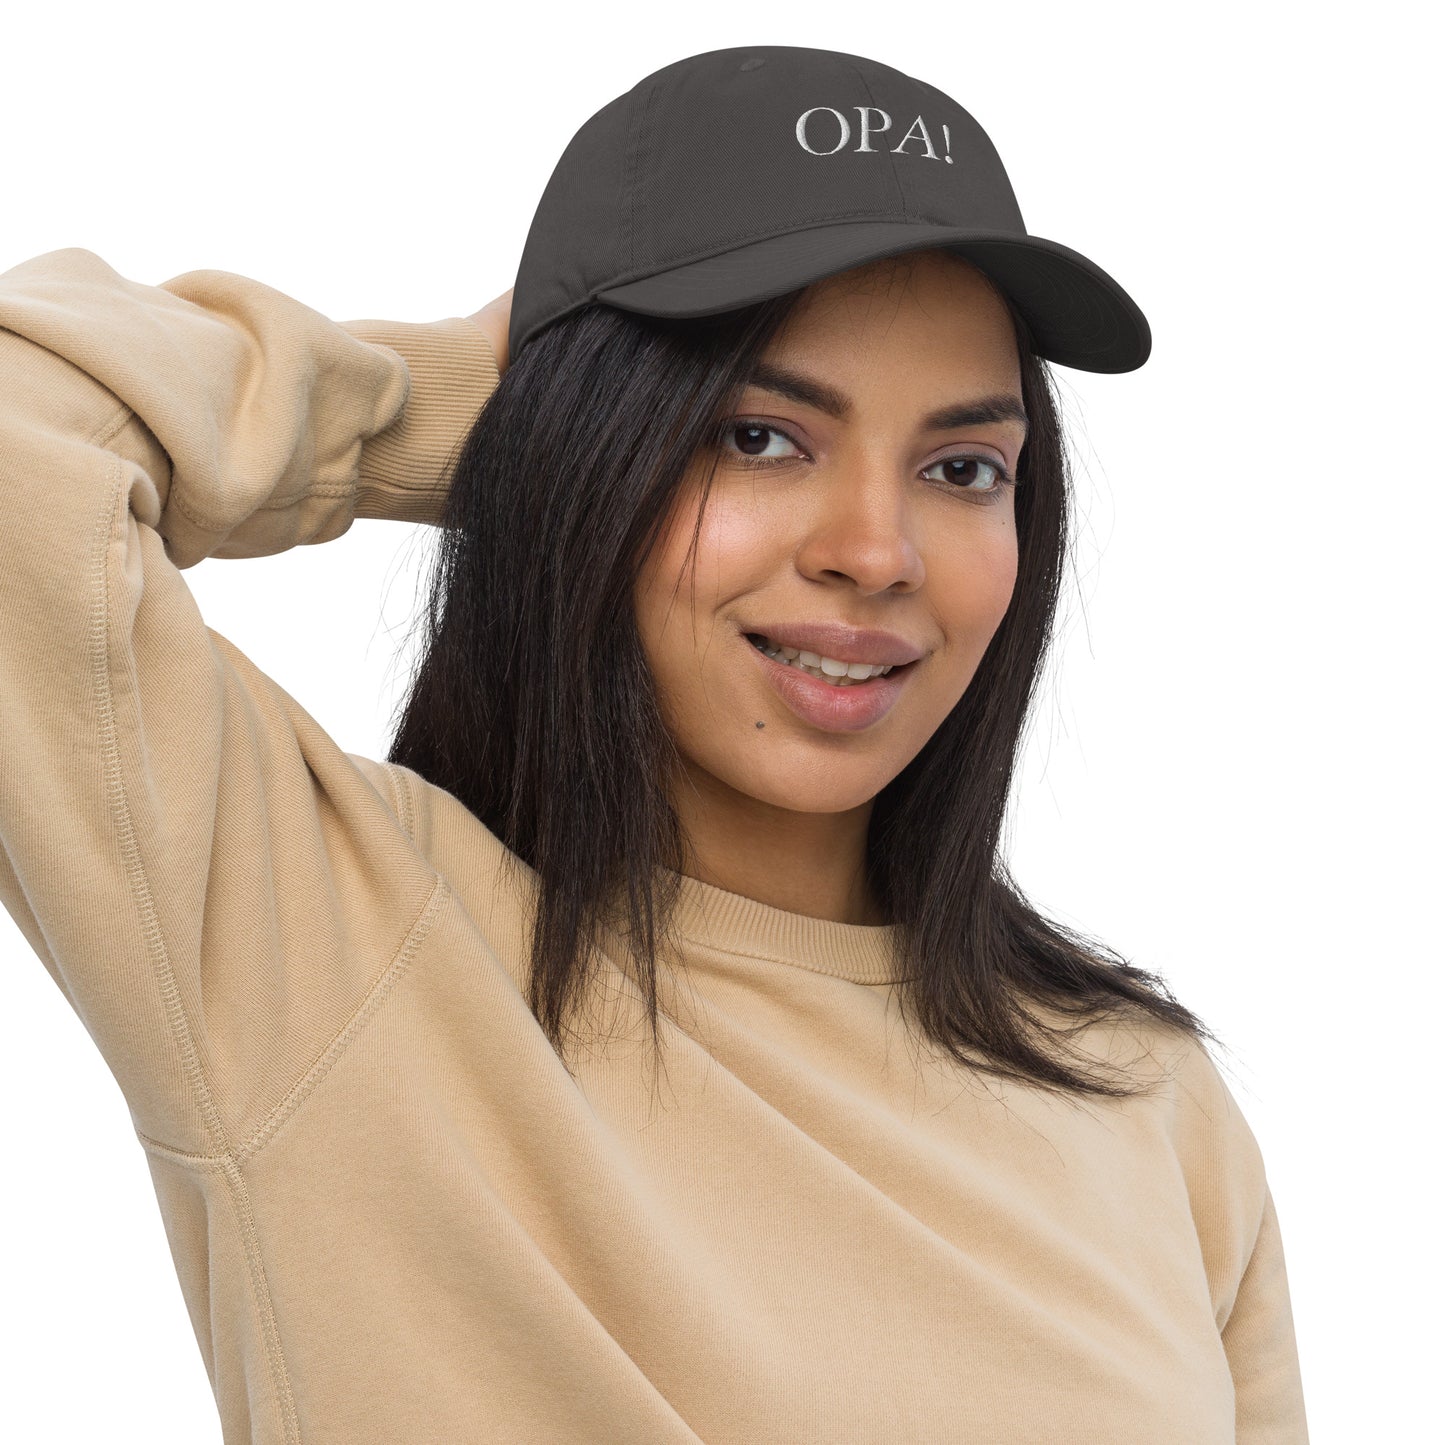 OPA! Organic Cotton Dad Hat